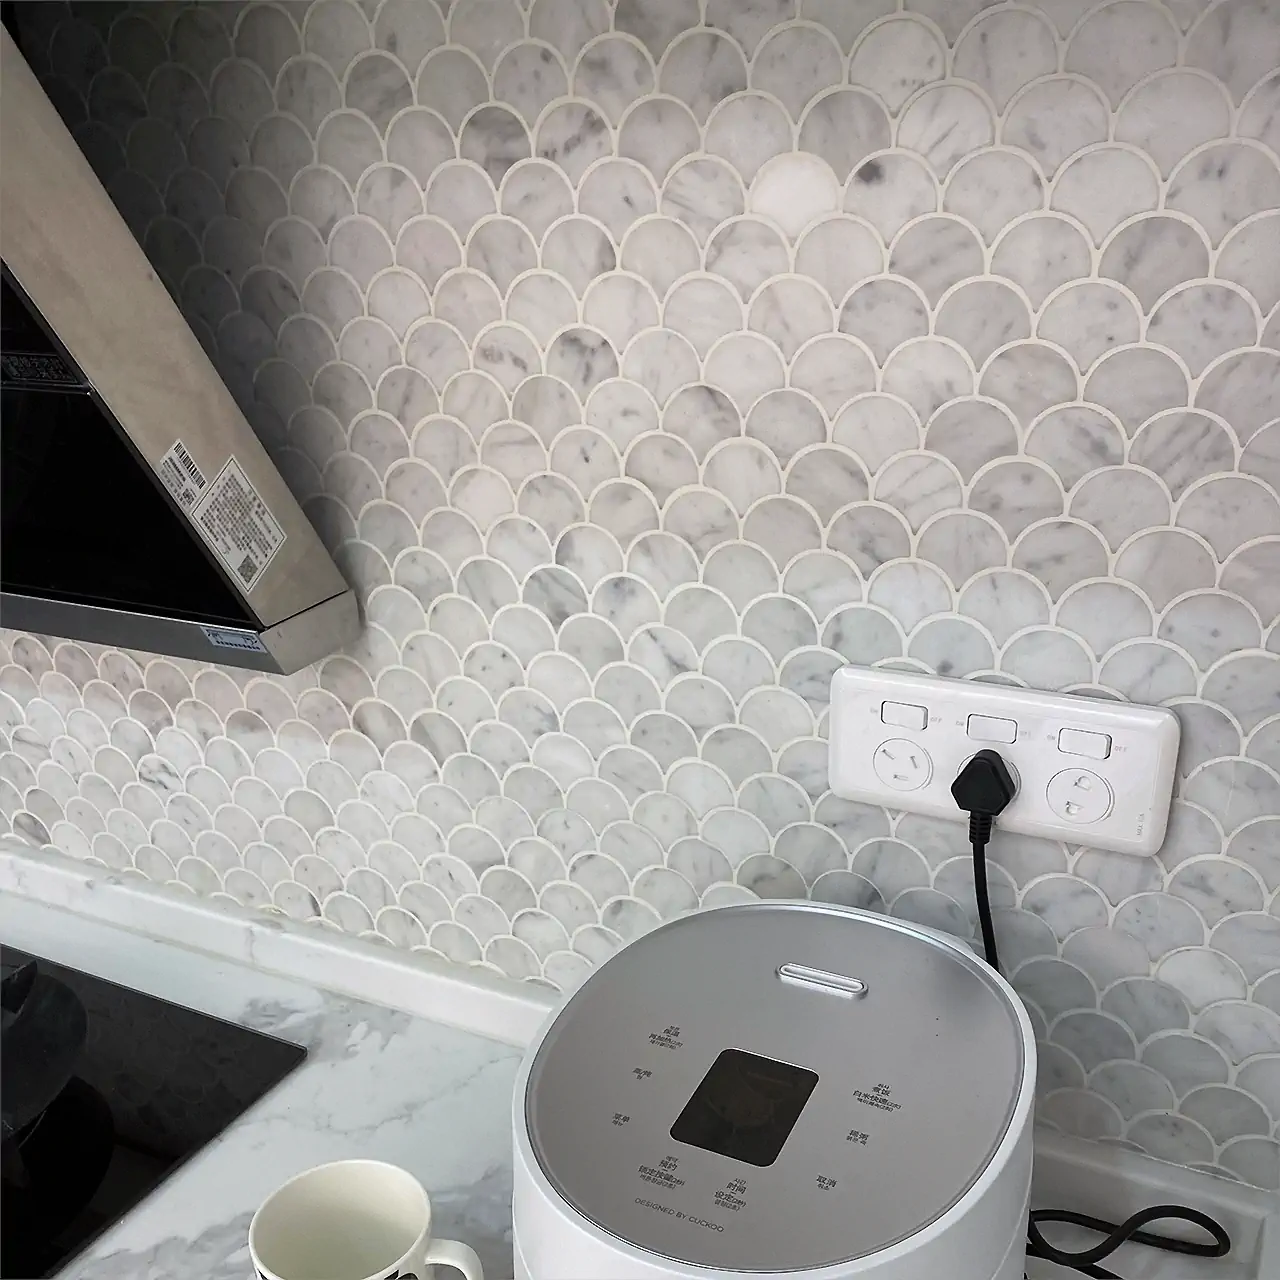 Arabesque Marble Tiles as the Shower Wall Tiles Design Ideas 01